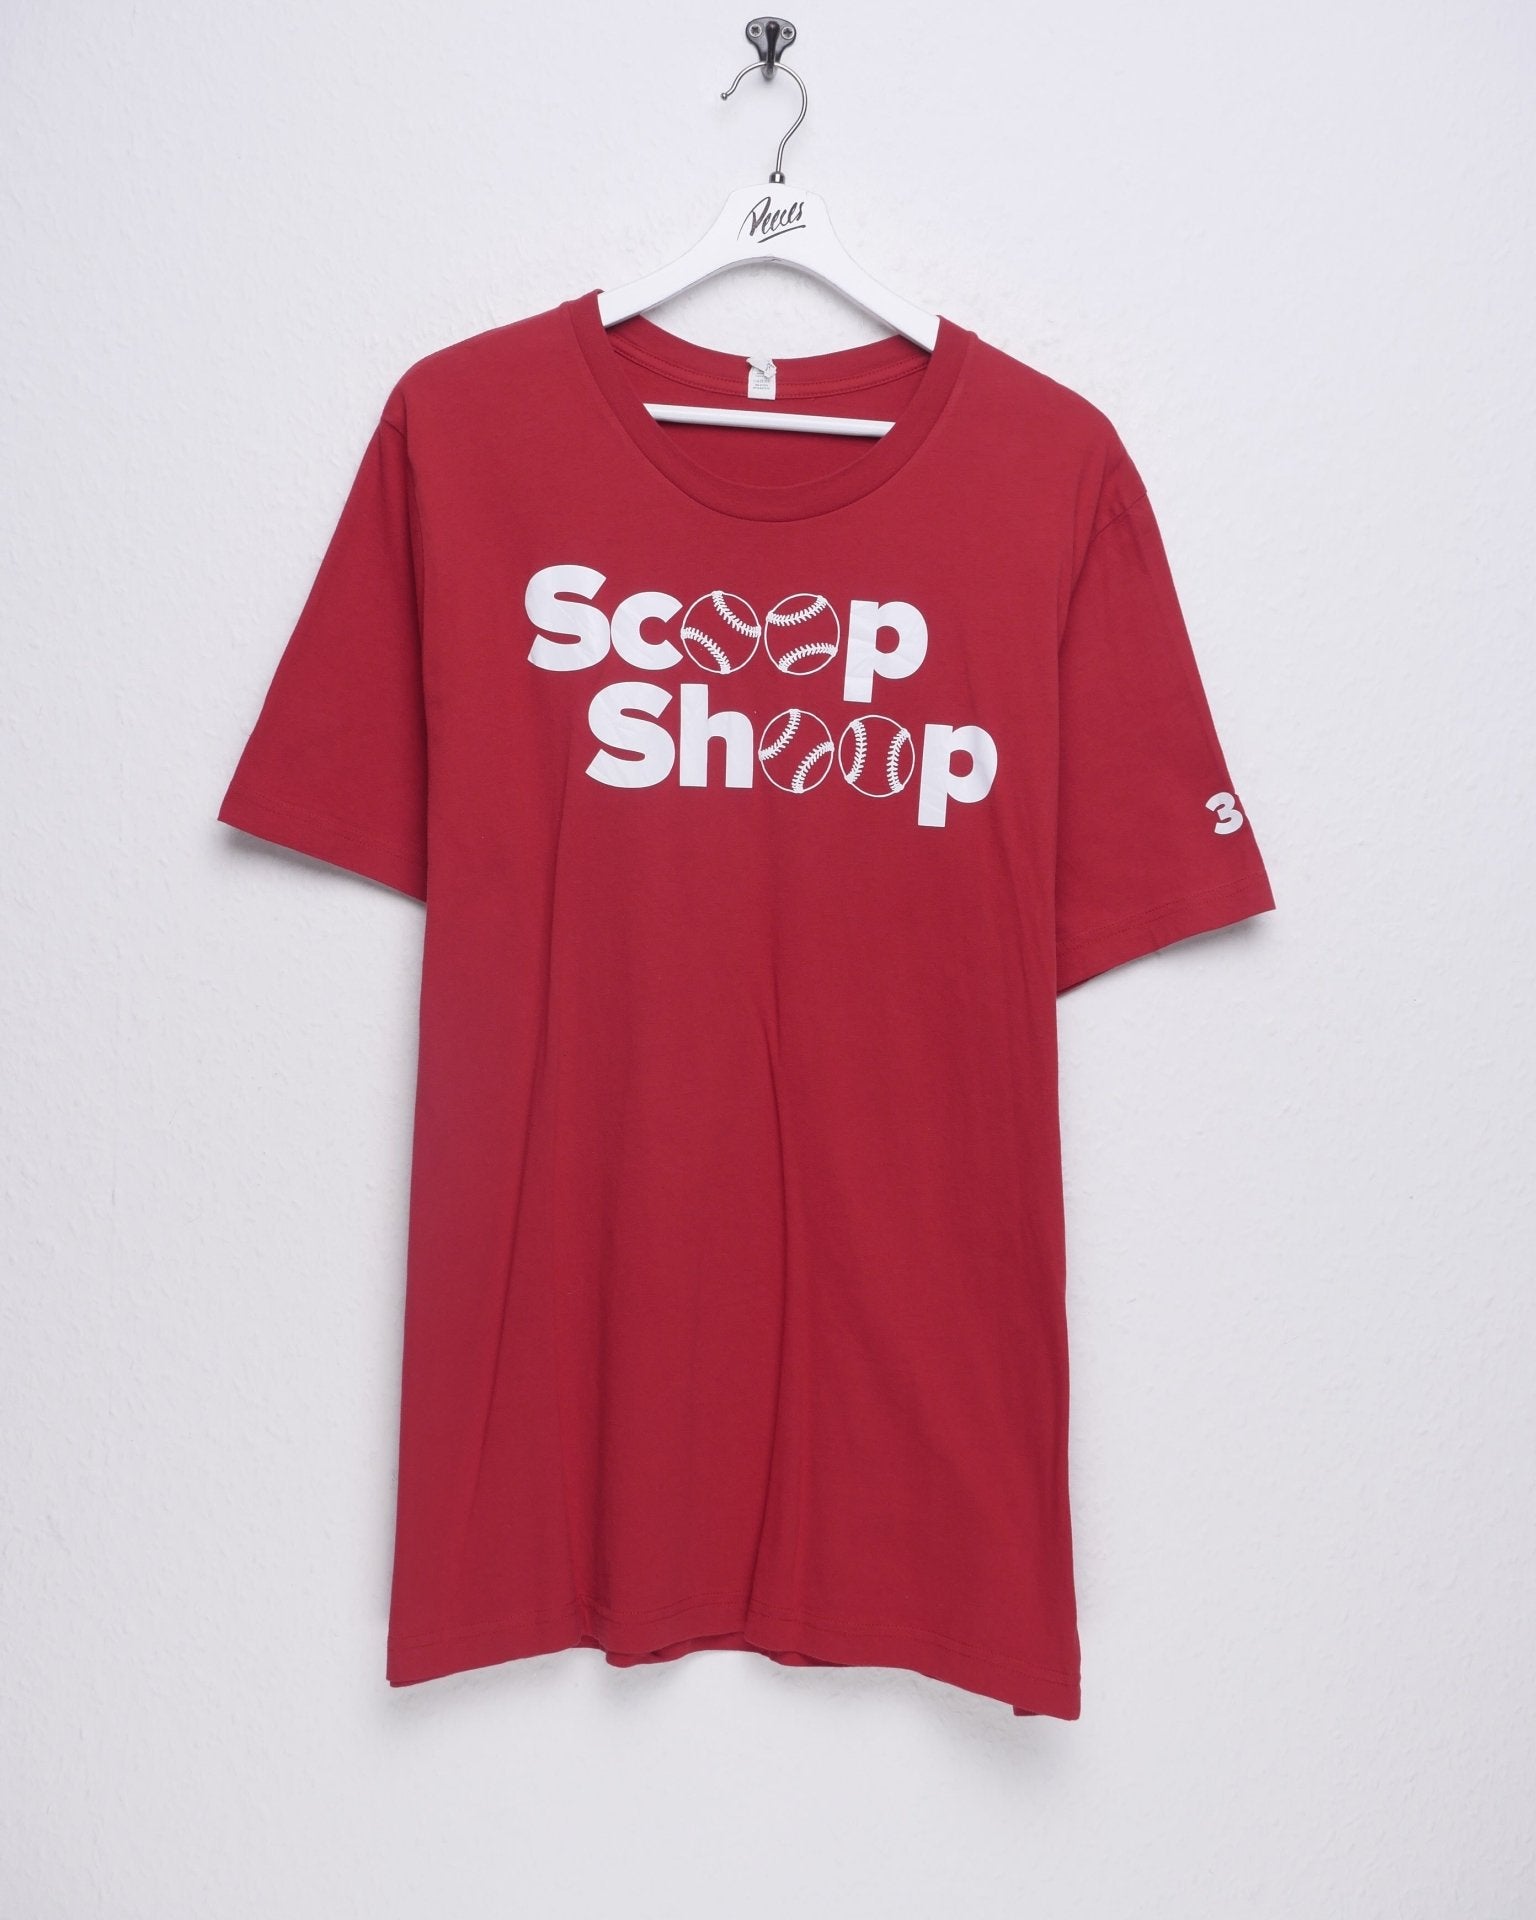 Scoop Shoop printed Spellout Shirt - Peeces